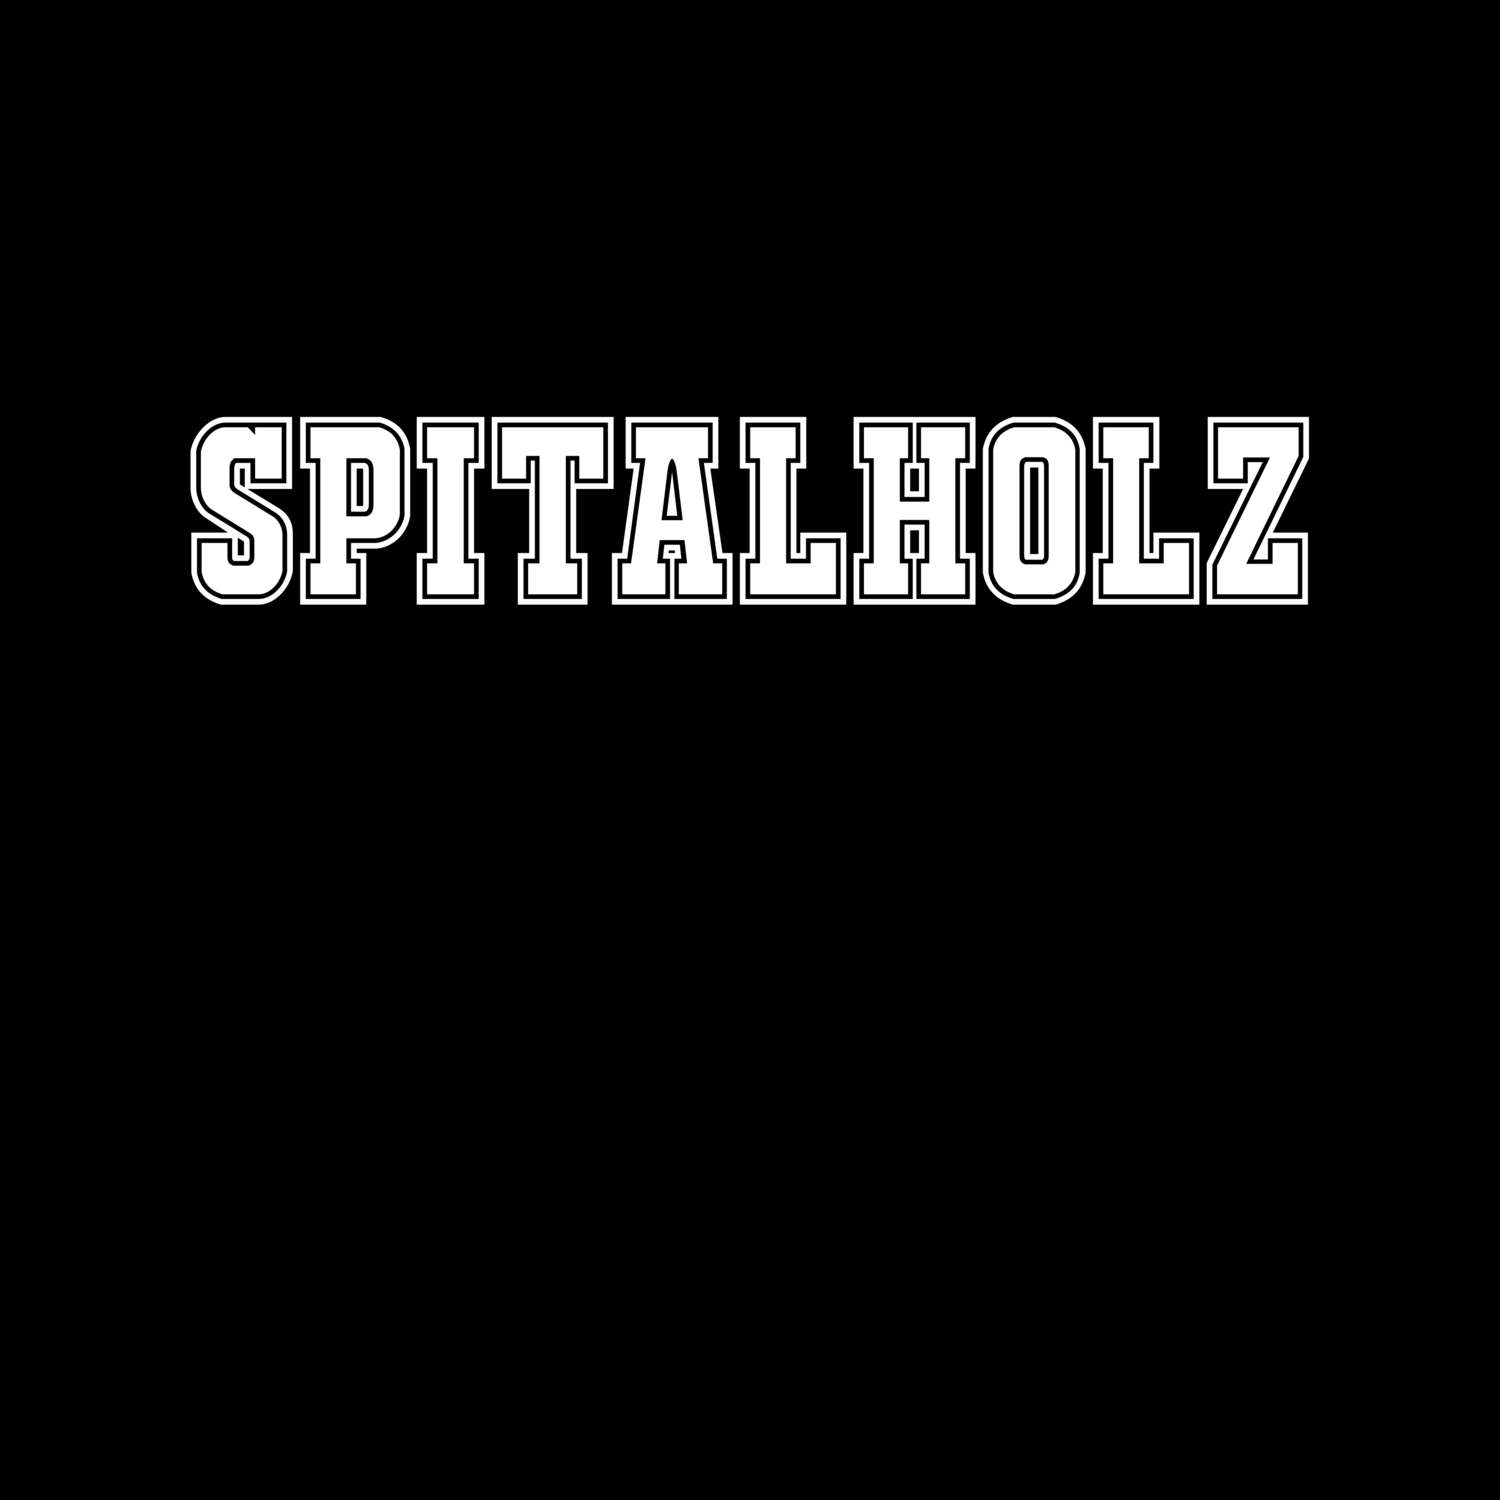 Spitalholz T-Shirt »Classic«